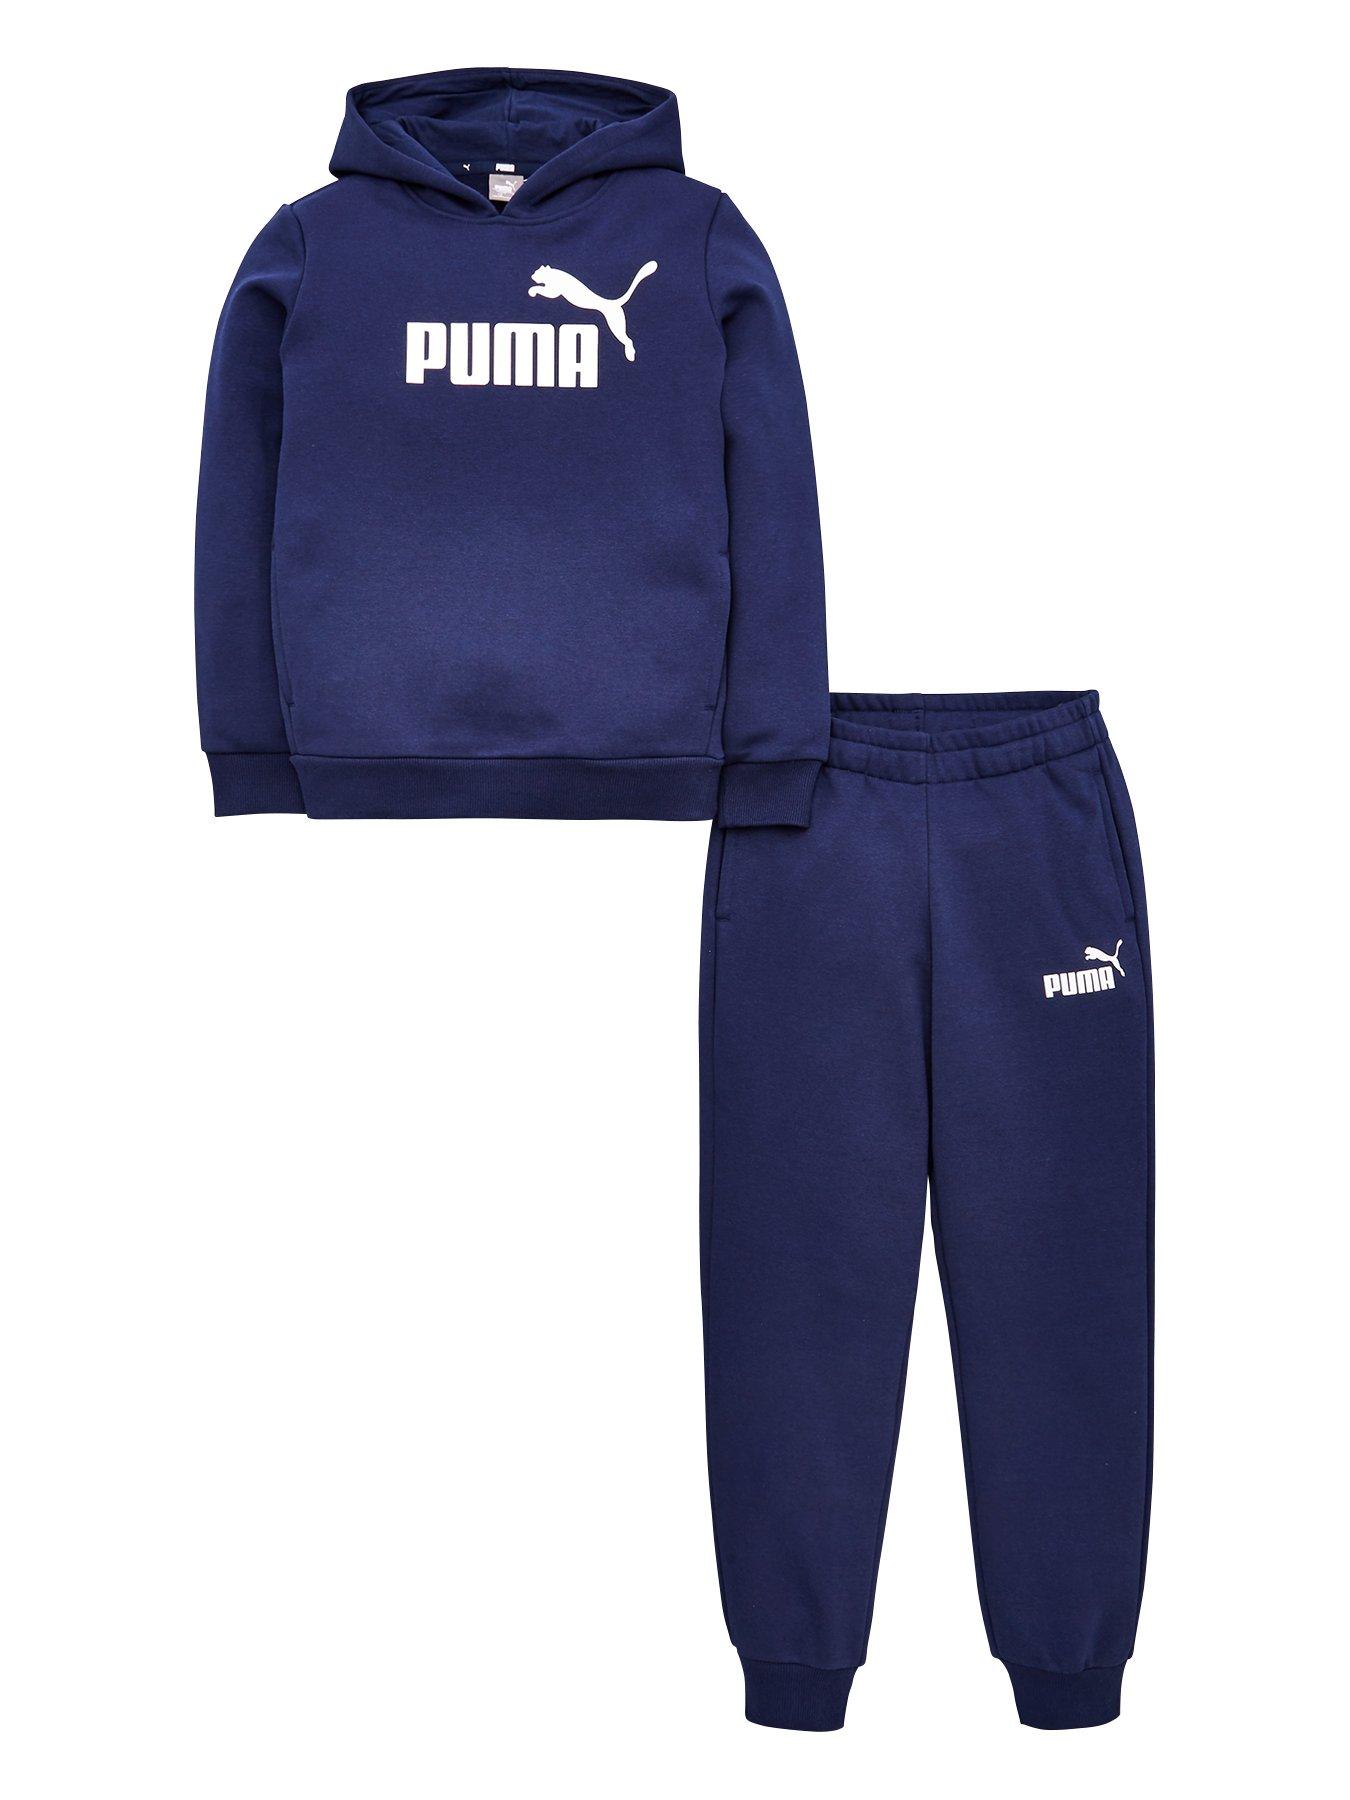 navy blue puma sweatsuit